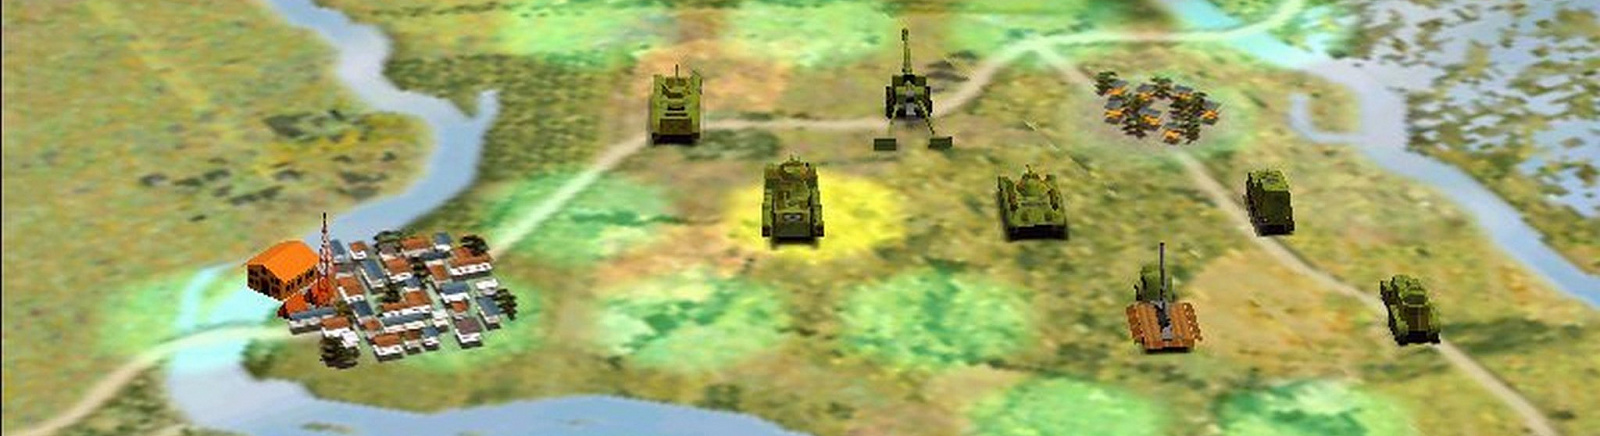 Дата выхода Panzer General 3: Scorched Earth  на PC в России и во всем мире